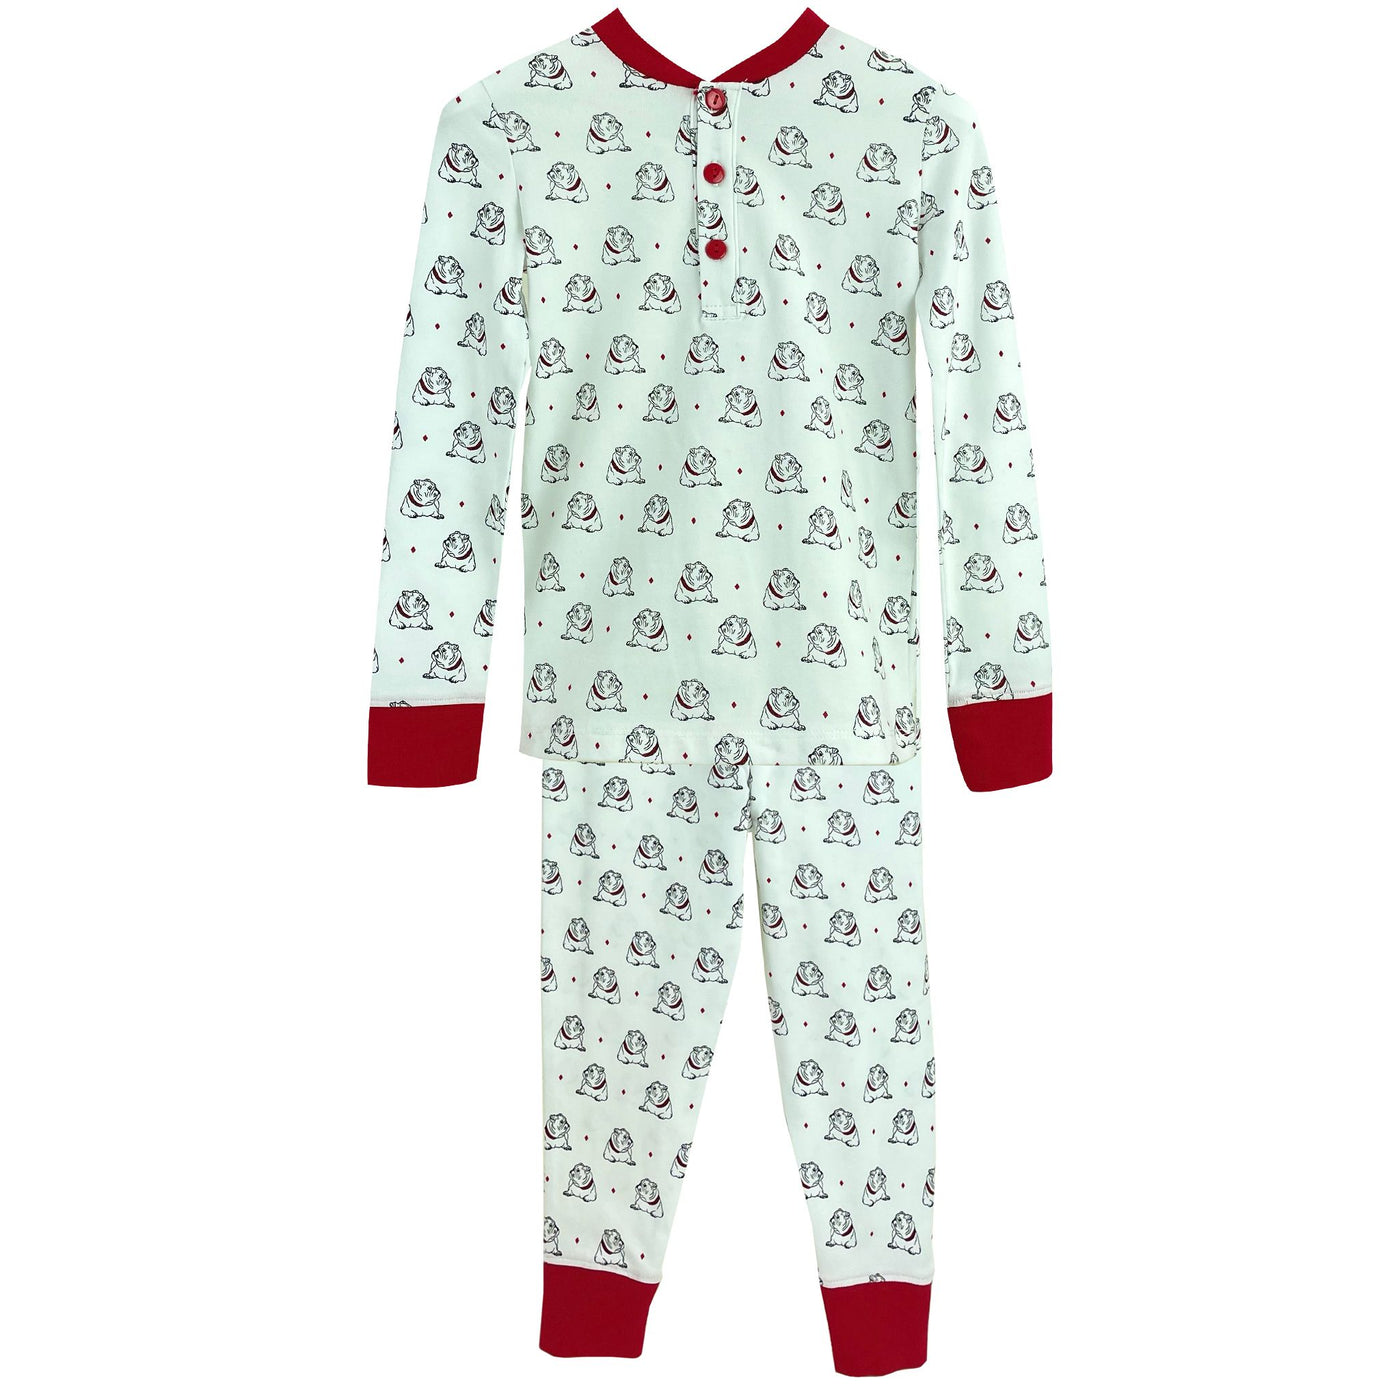 Red/Black Bulldog Pajama Set